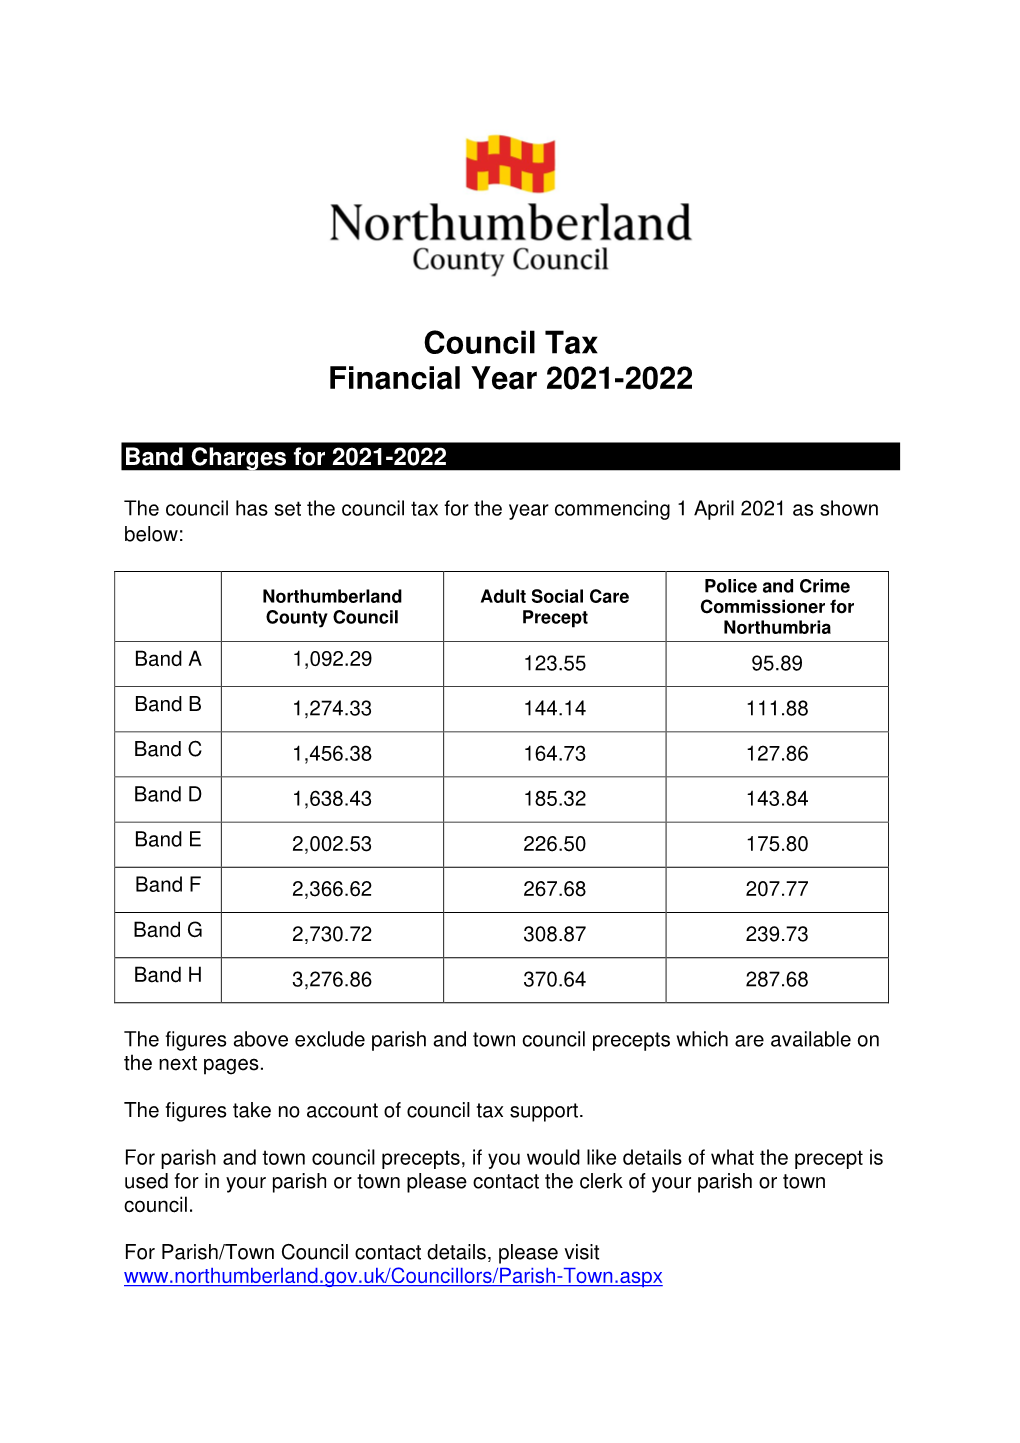 Council Tax Financial Year 2021-2022